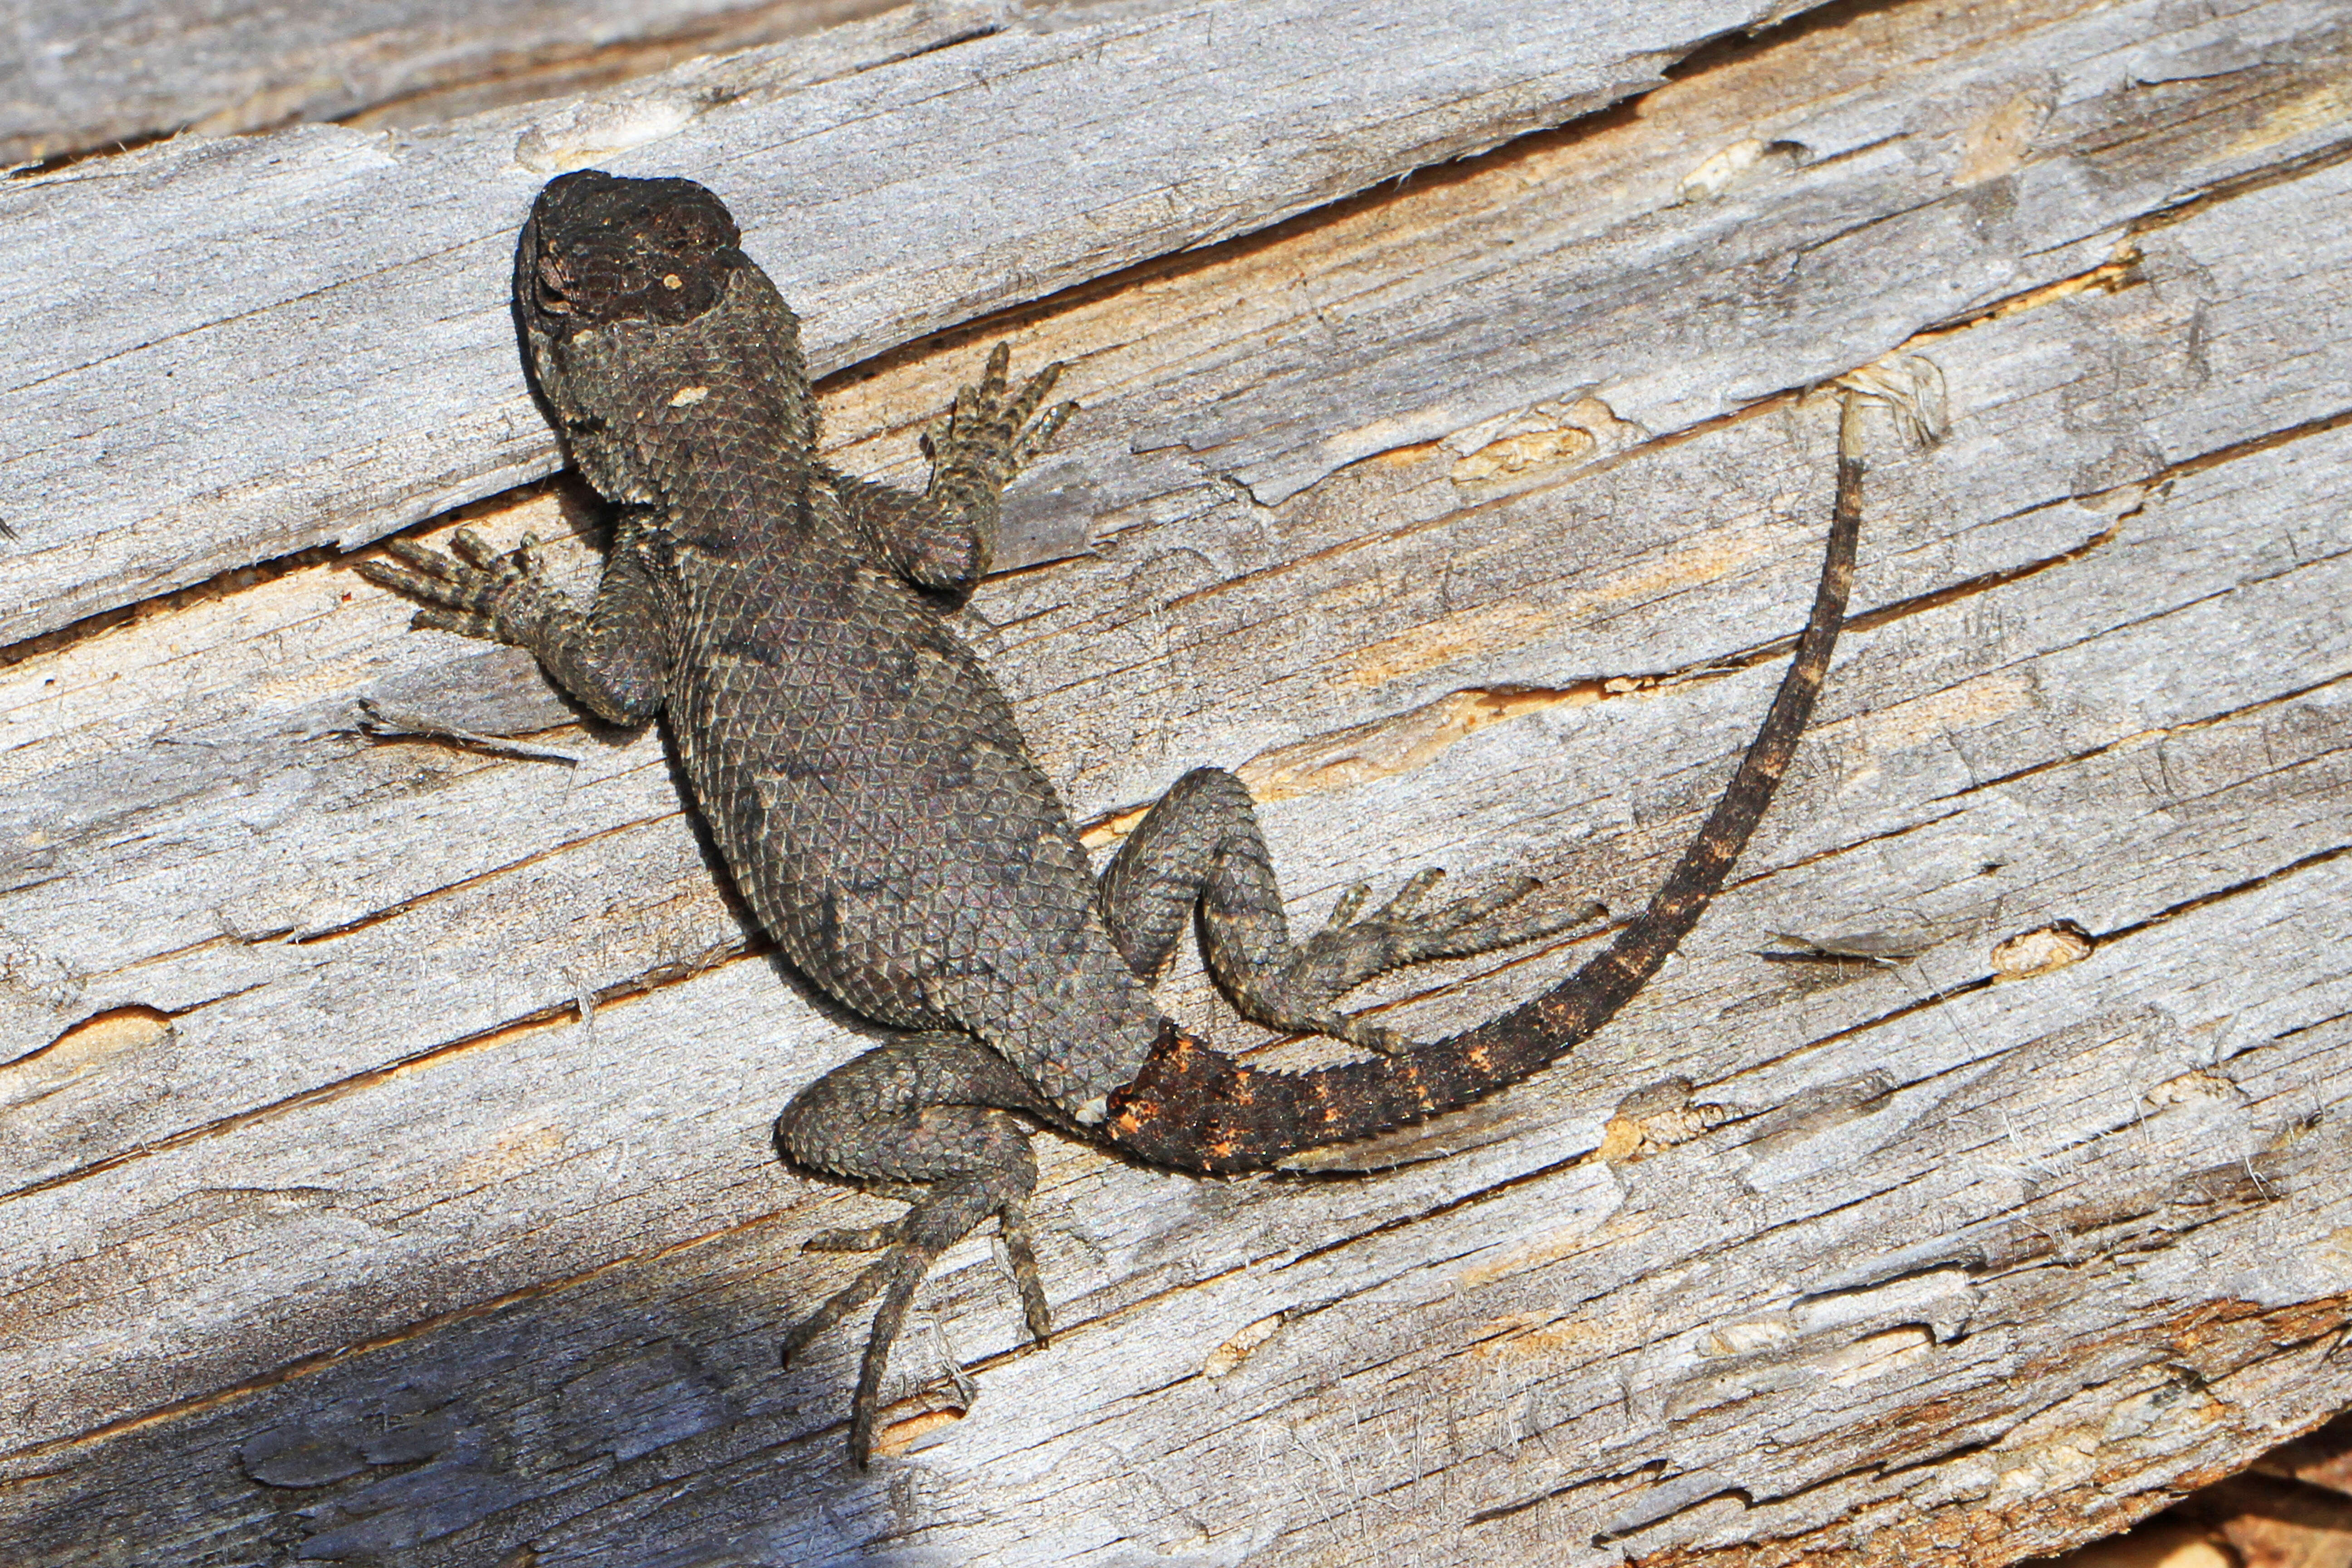 Image of Eastern Fence Lizard